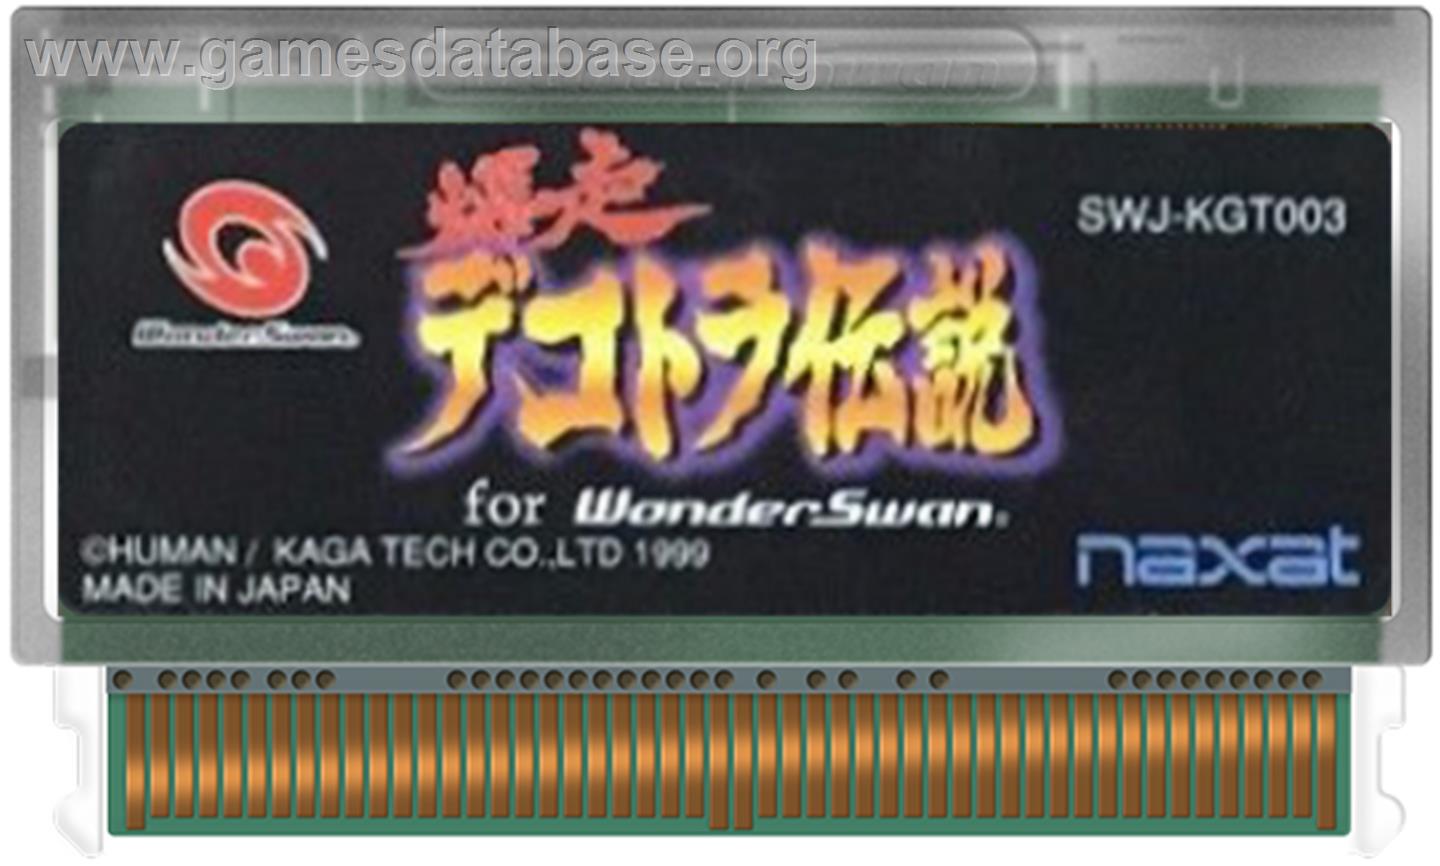 Bakusou Dekotora Densetsu for WonderSwan - Bandai WonderSwan - Artwork - Cartridge